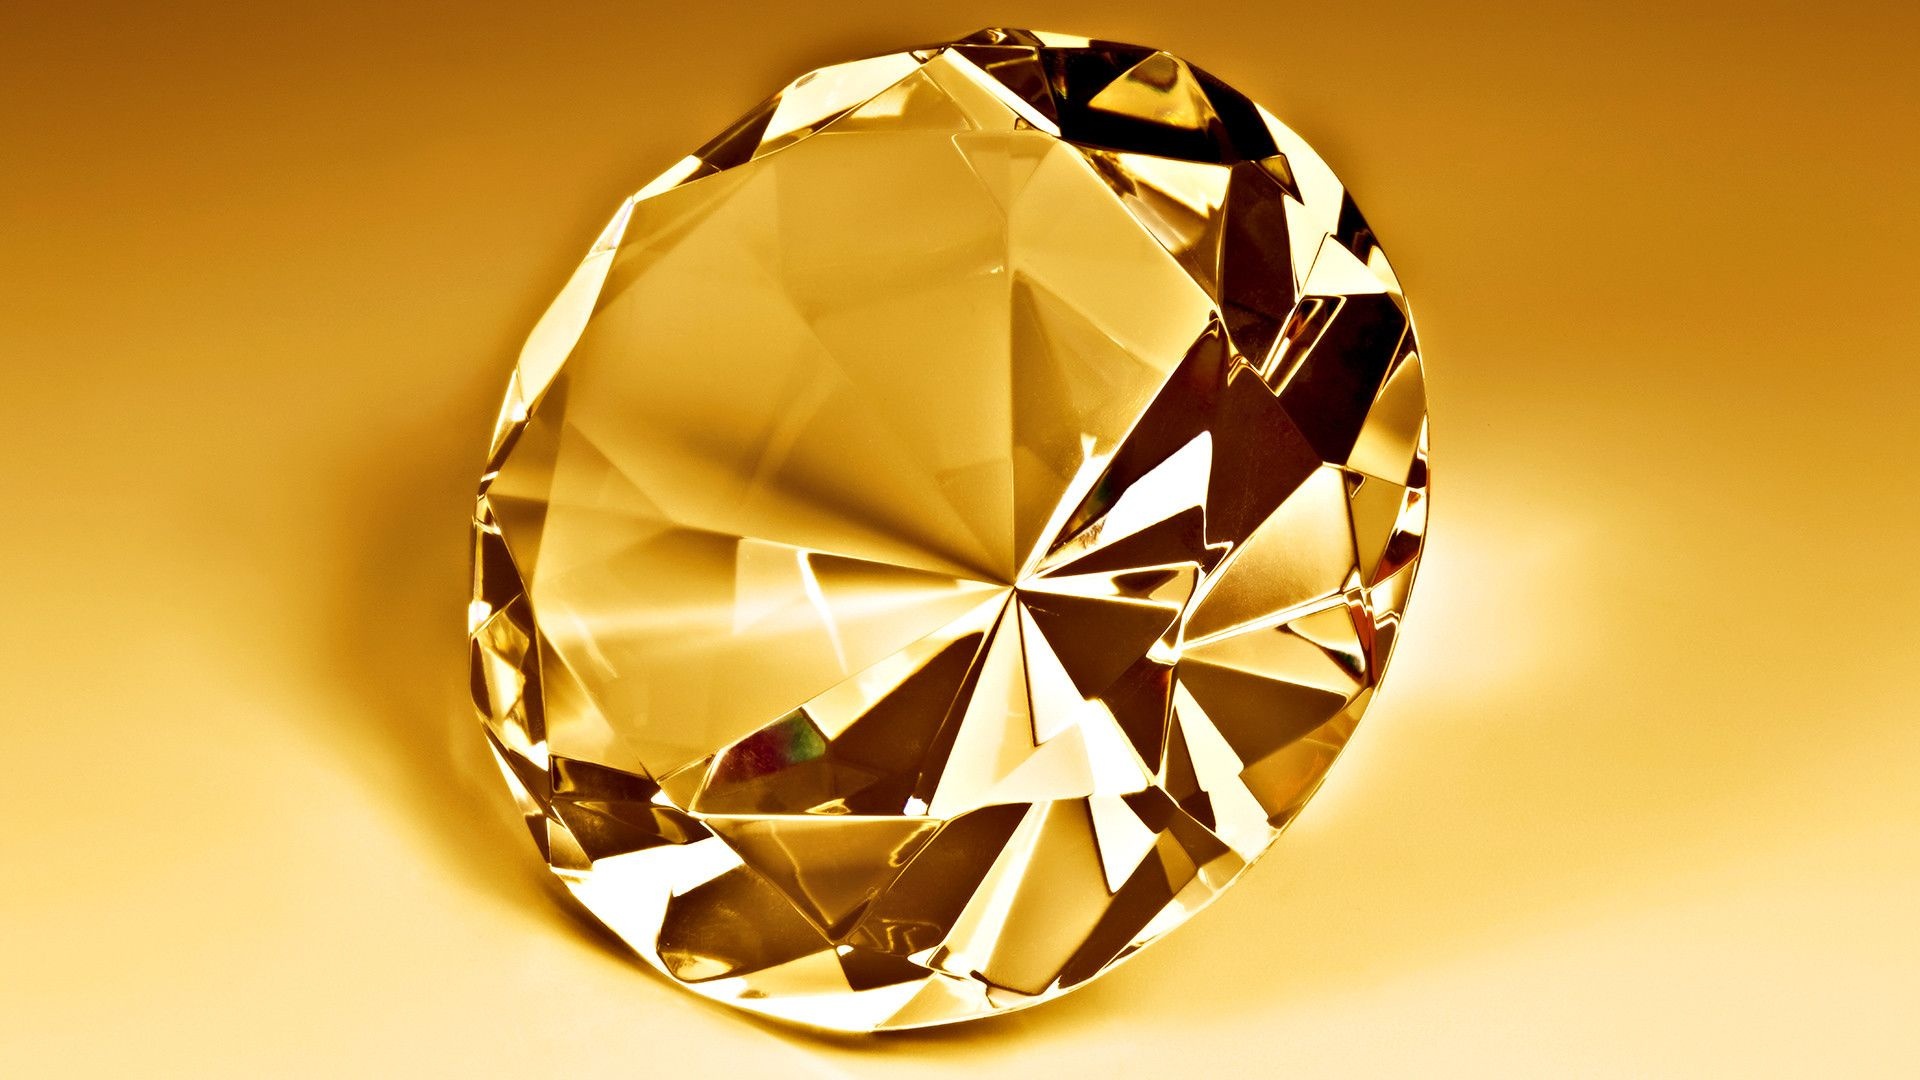 Gold diamond wallpaper, Luxurious brilliance, Opulent elegance, Shimmering beauty, 1920x1080 Full HD Desktop